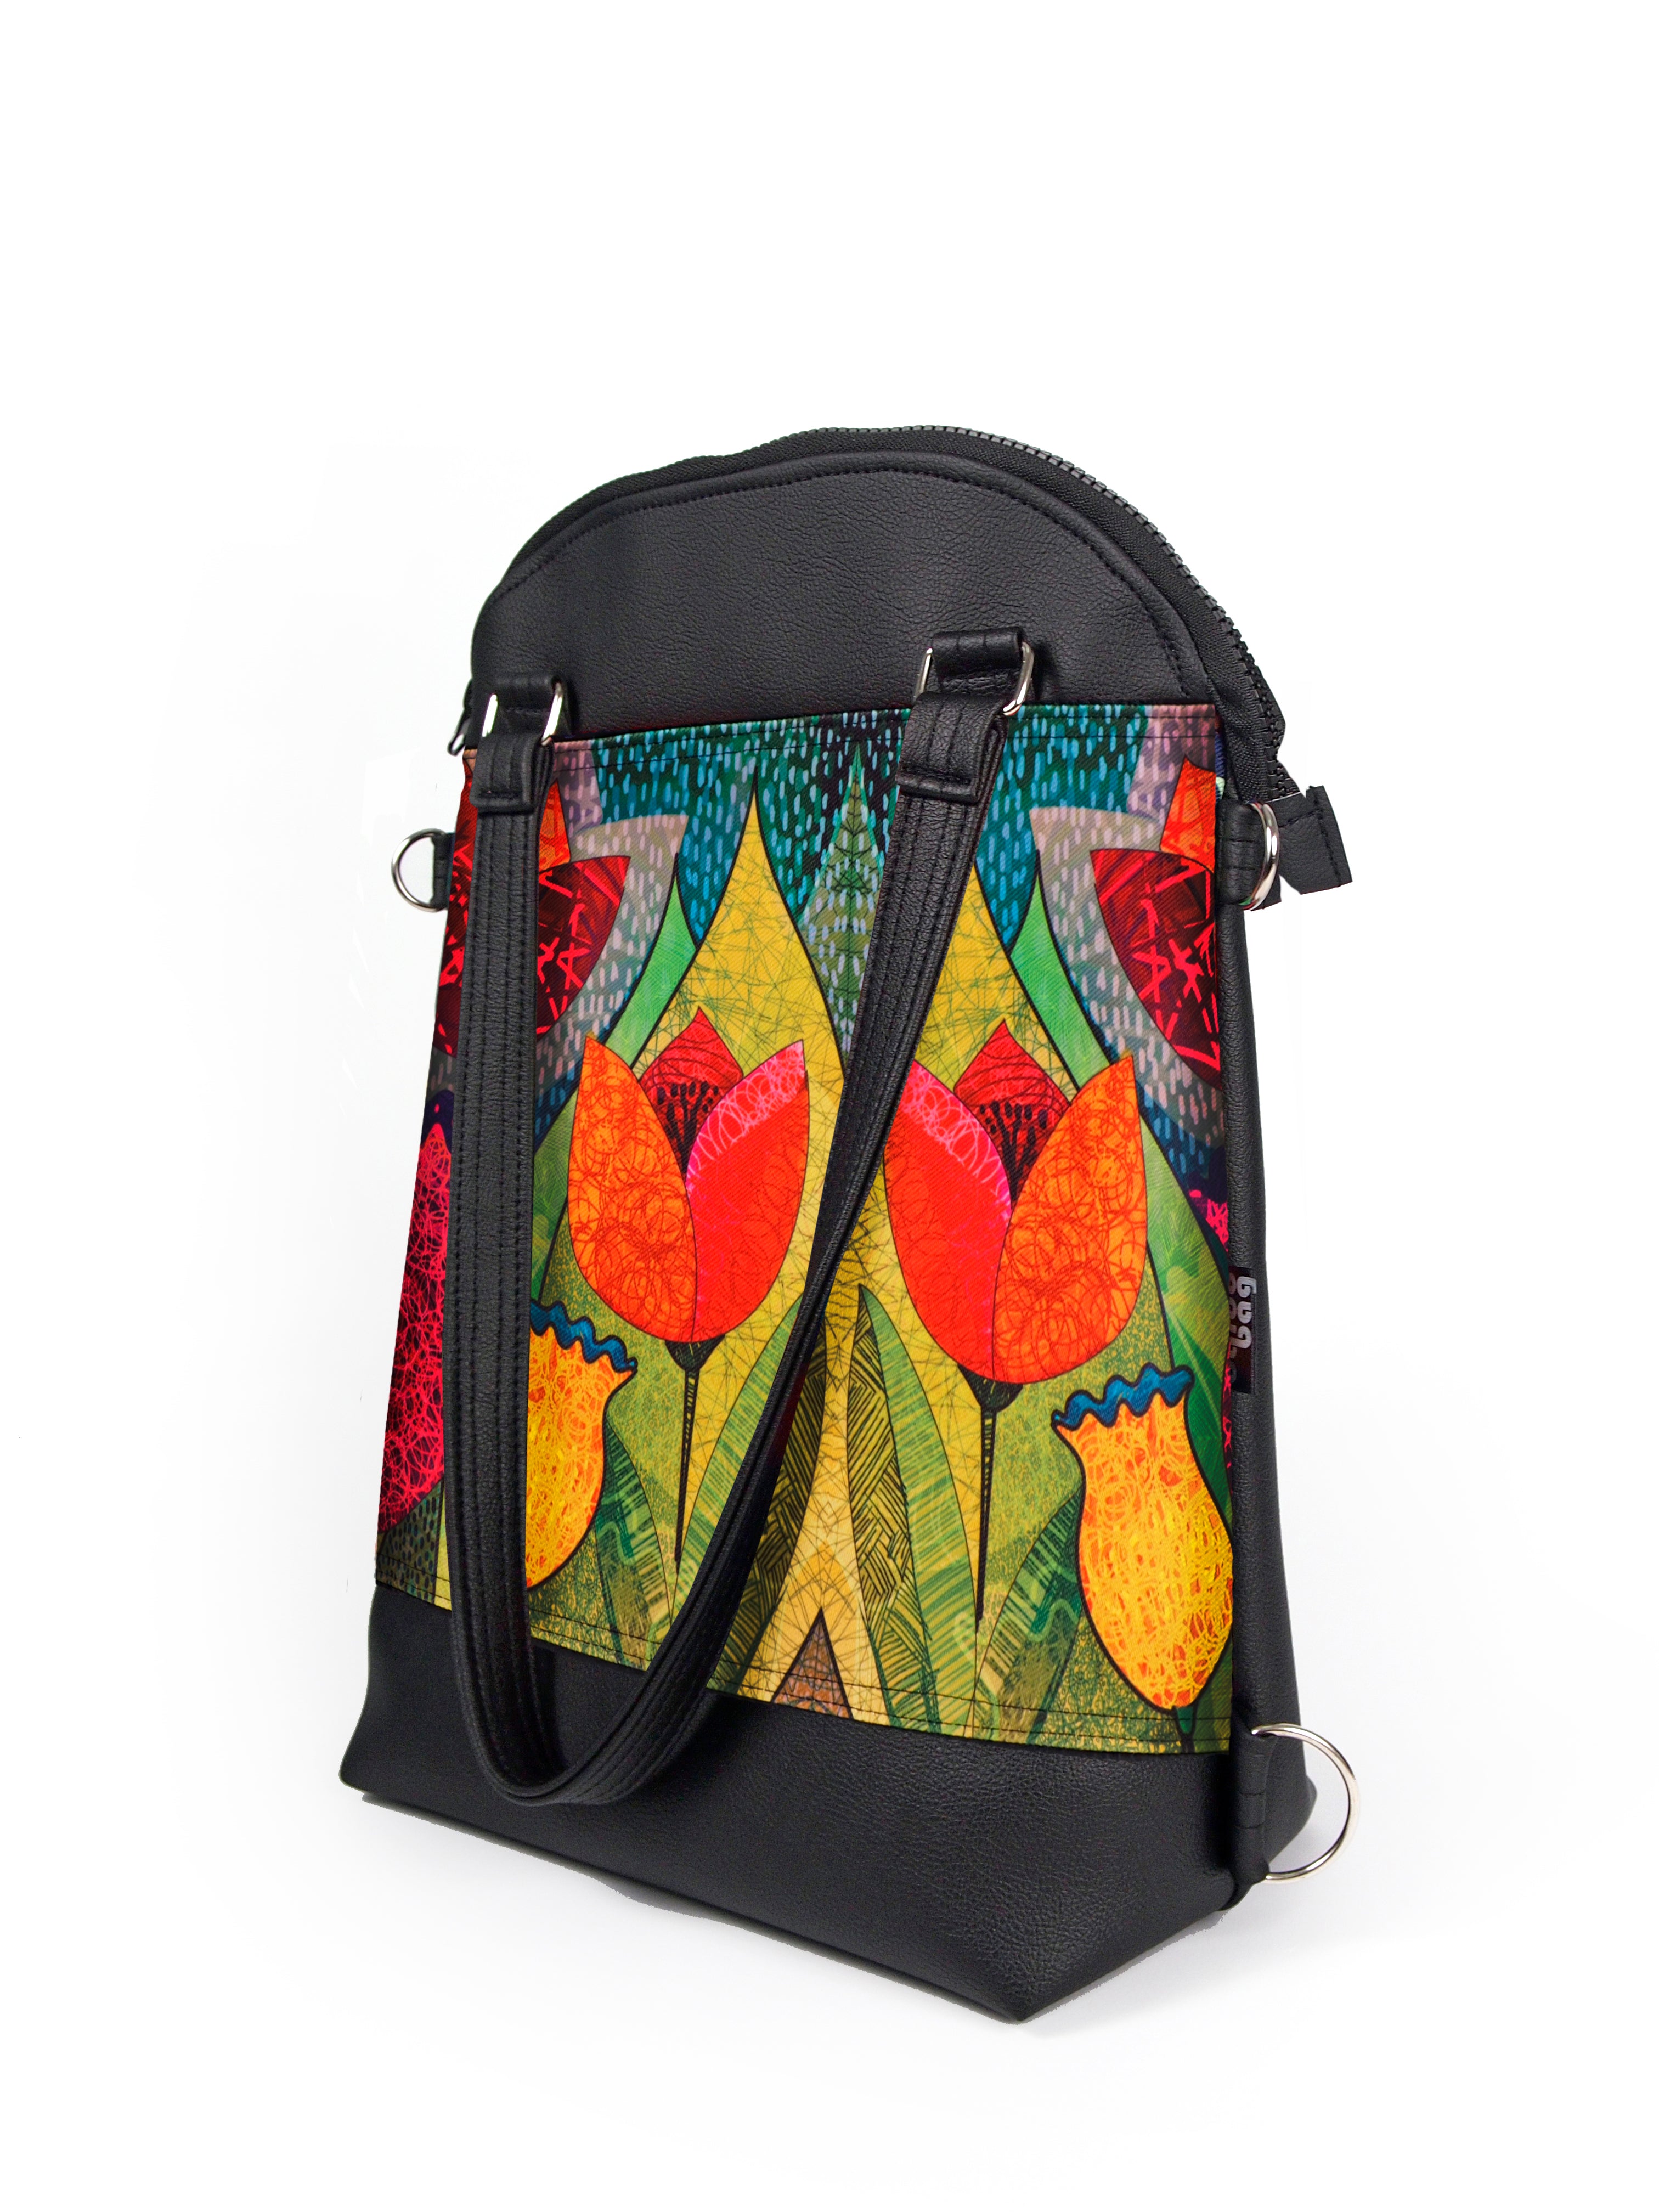 Bardo classic bag&backpack - Fairy garden